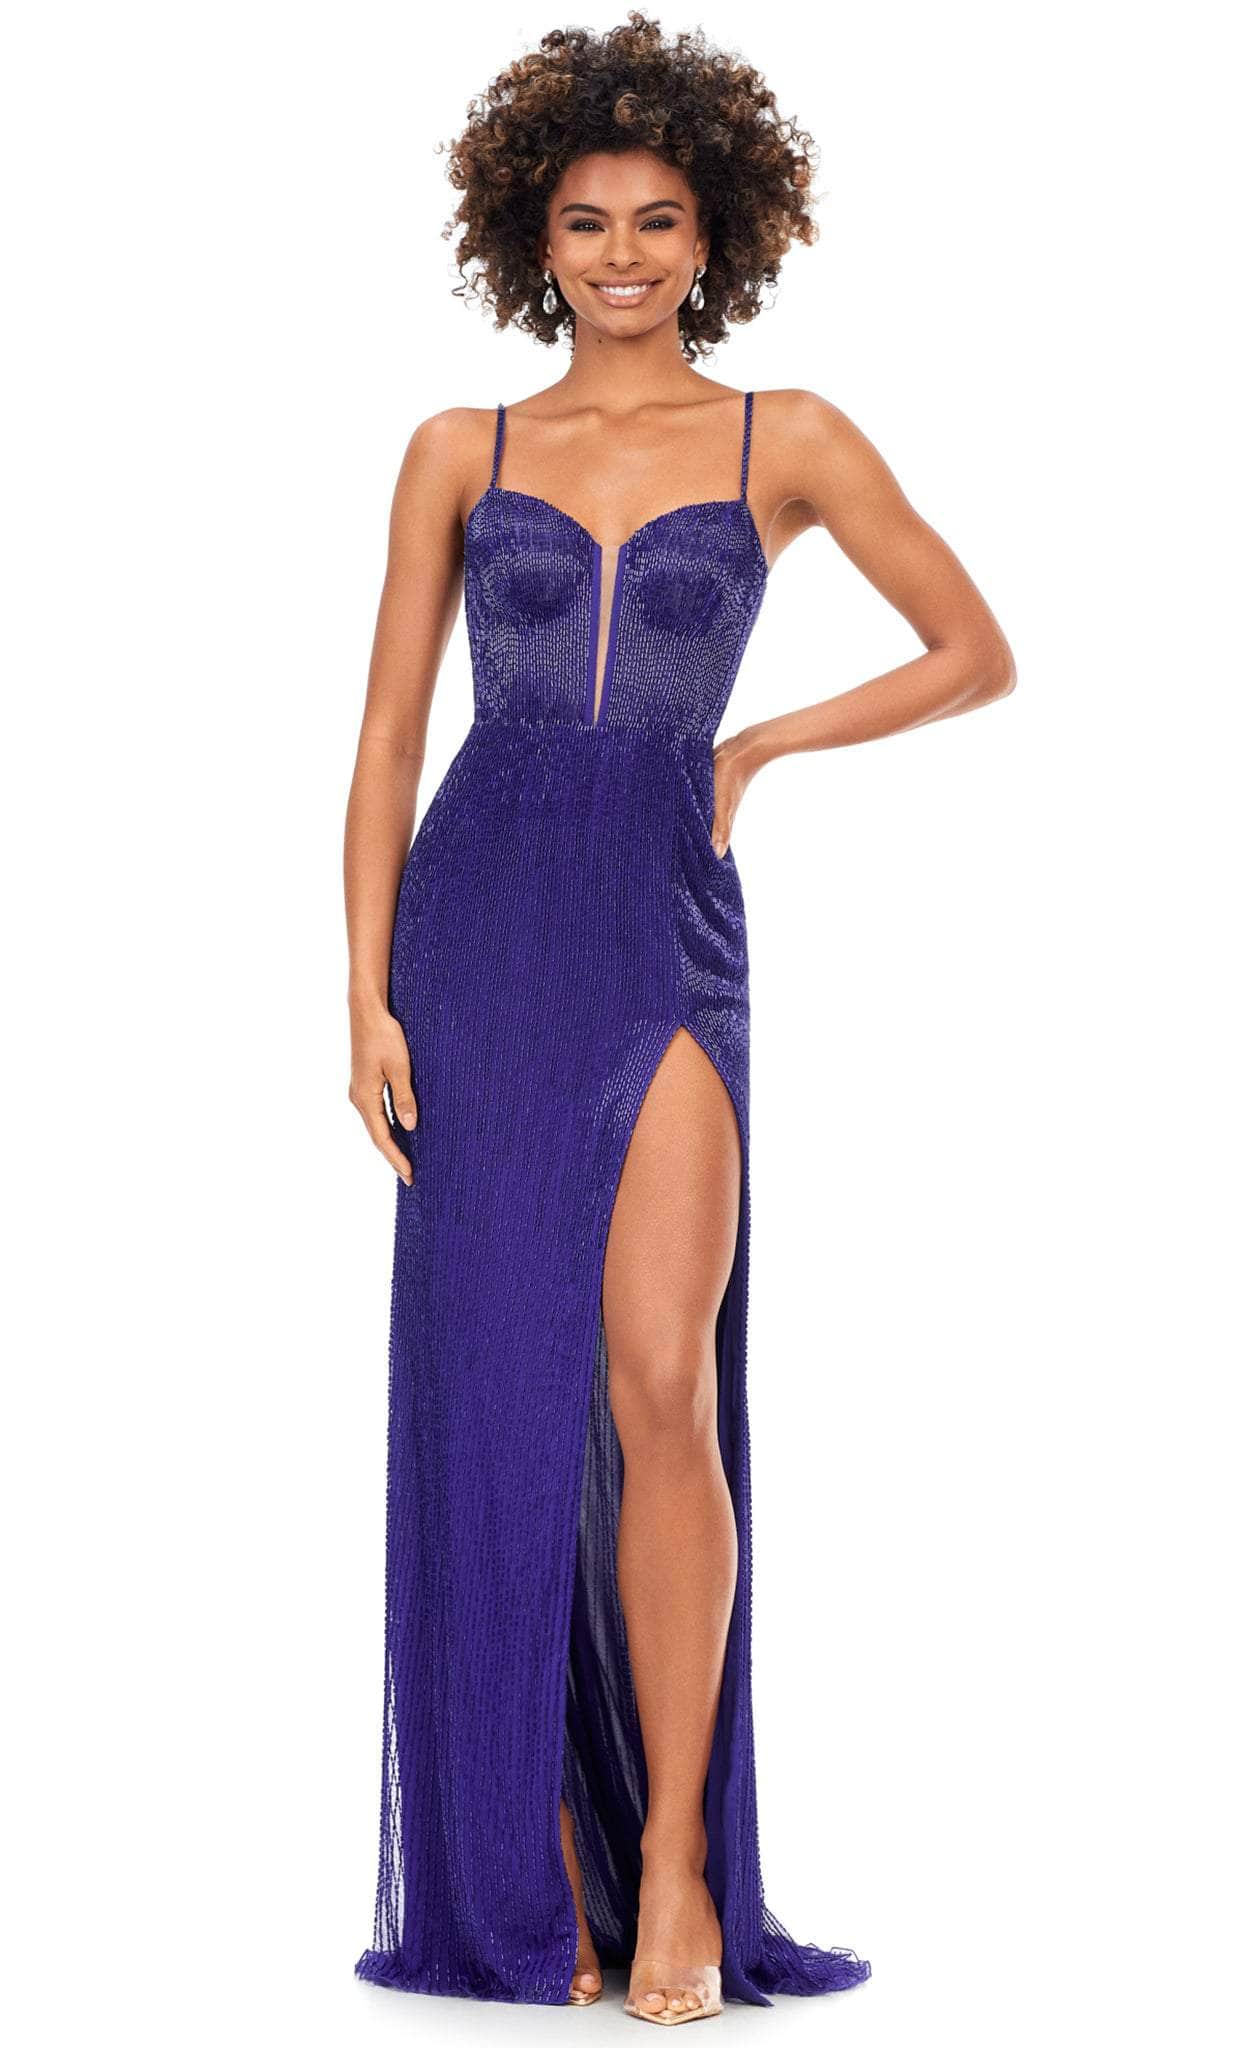 Ashley Lauren 11369 - Sleeveless Beaded Evening Gown Prom Dresses 0 / Purple